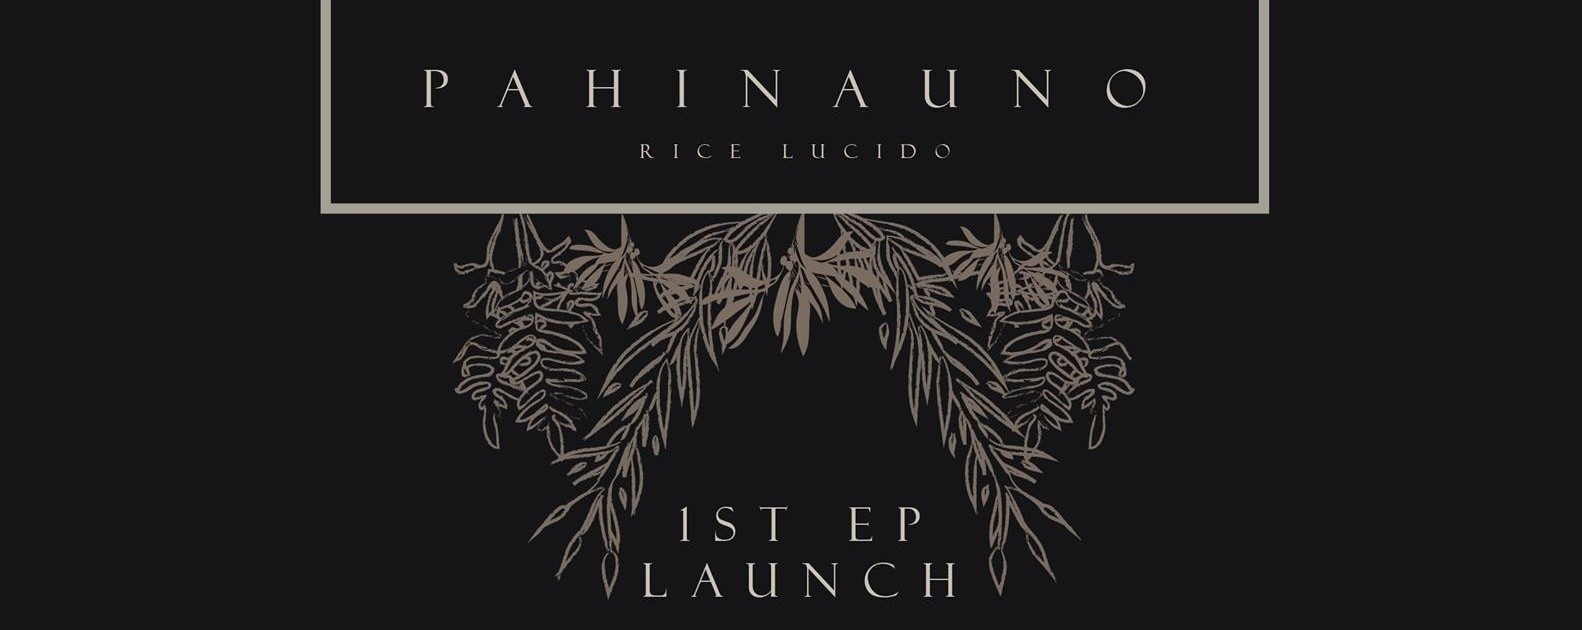 Pahina Uno | Rice Lucido EP Launch